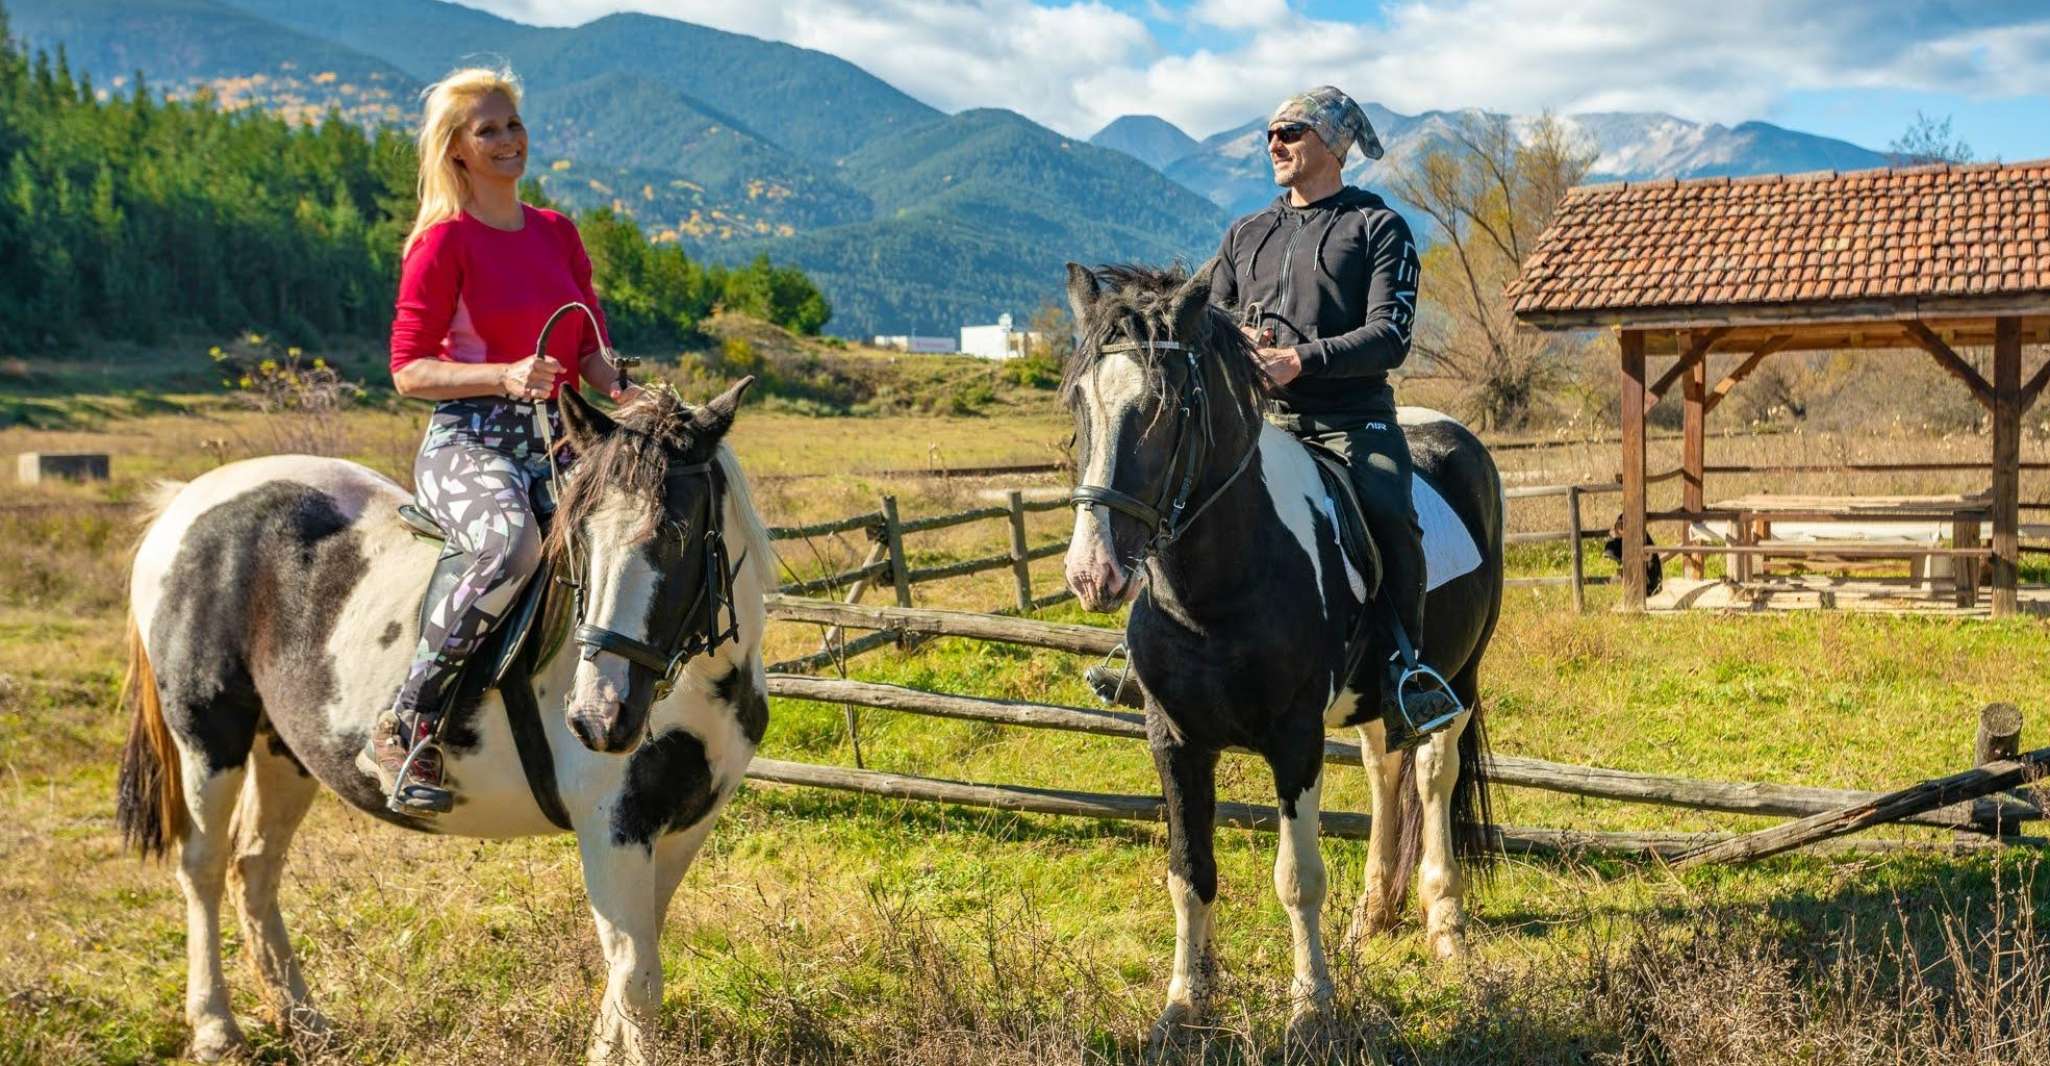 From Bansko, Horse Riding Experience - Housity